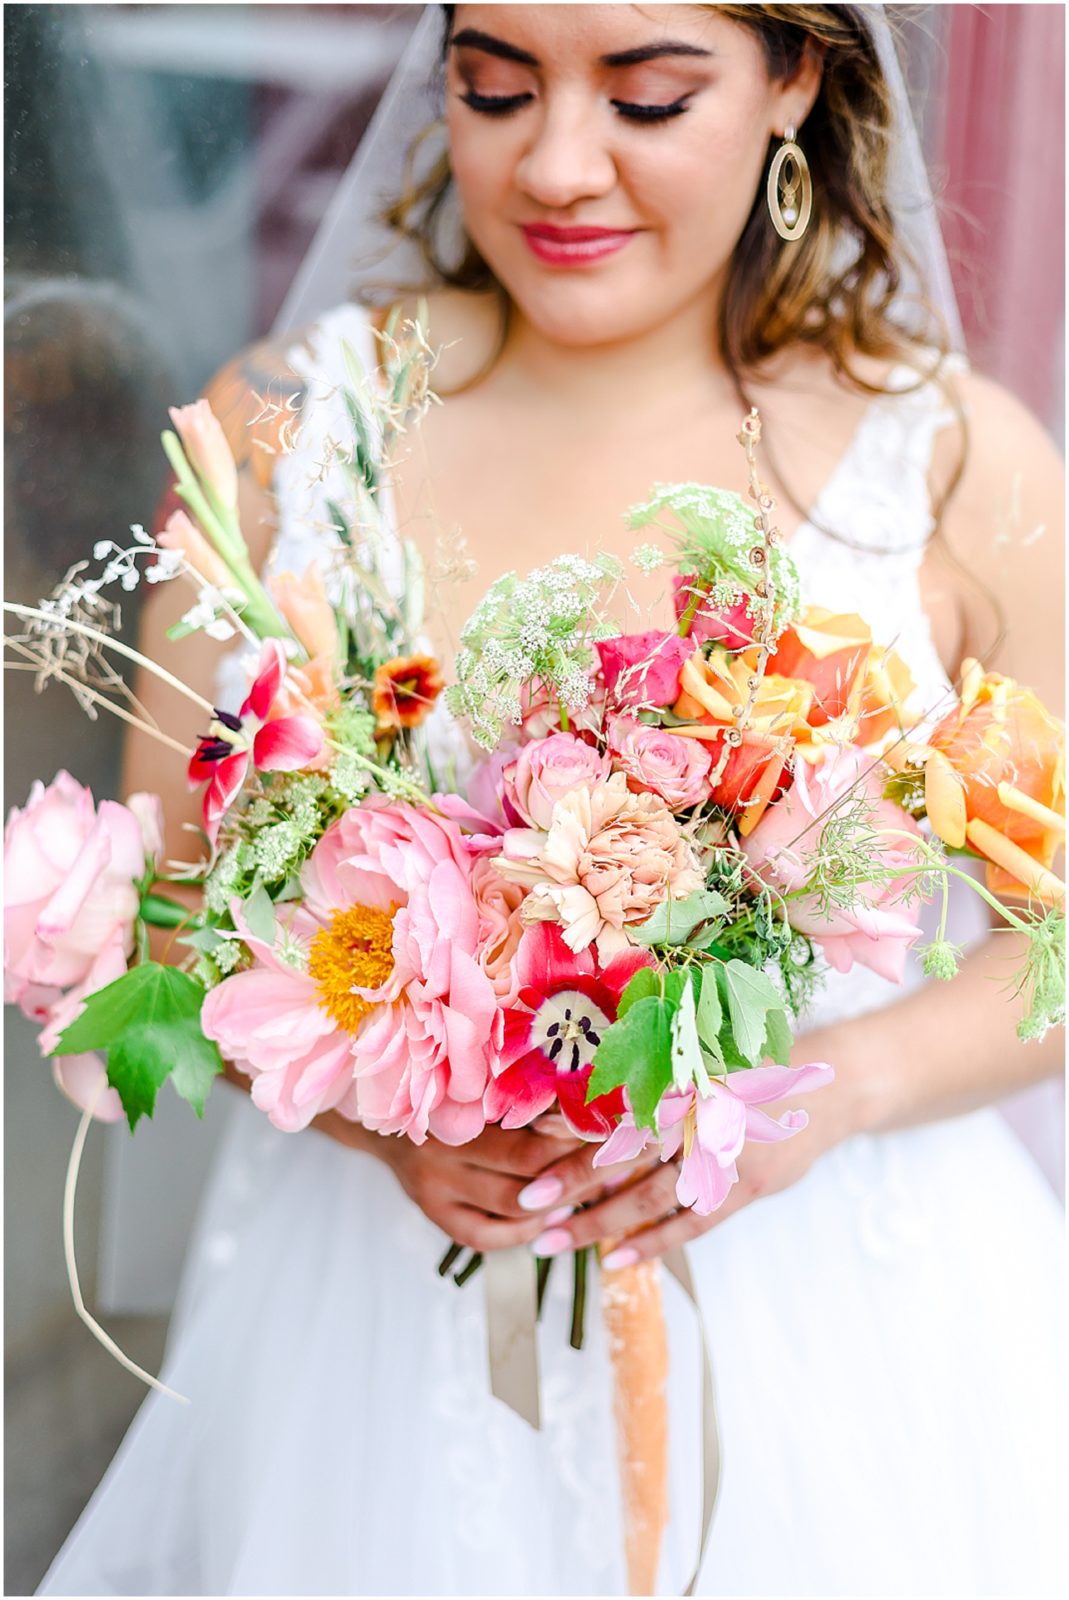 beautiful pink wedding bouquet by flower house kc - mariams aifan photography - kansas city